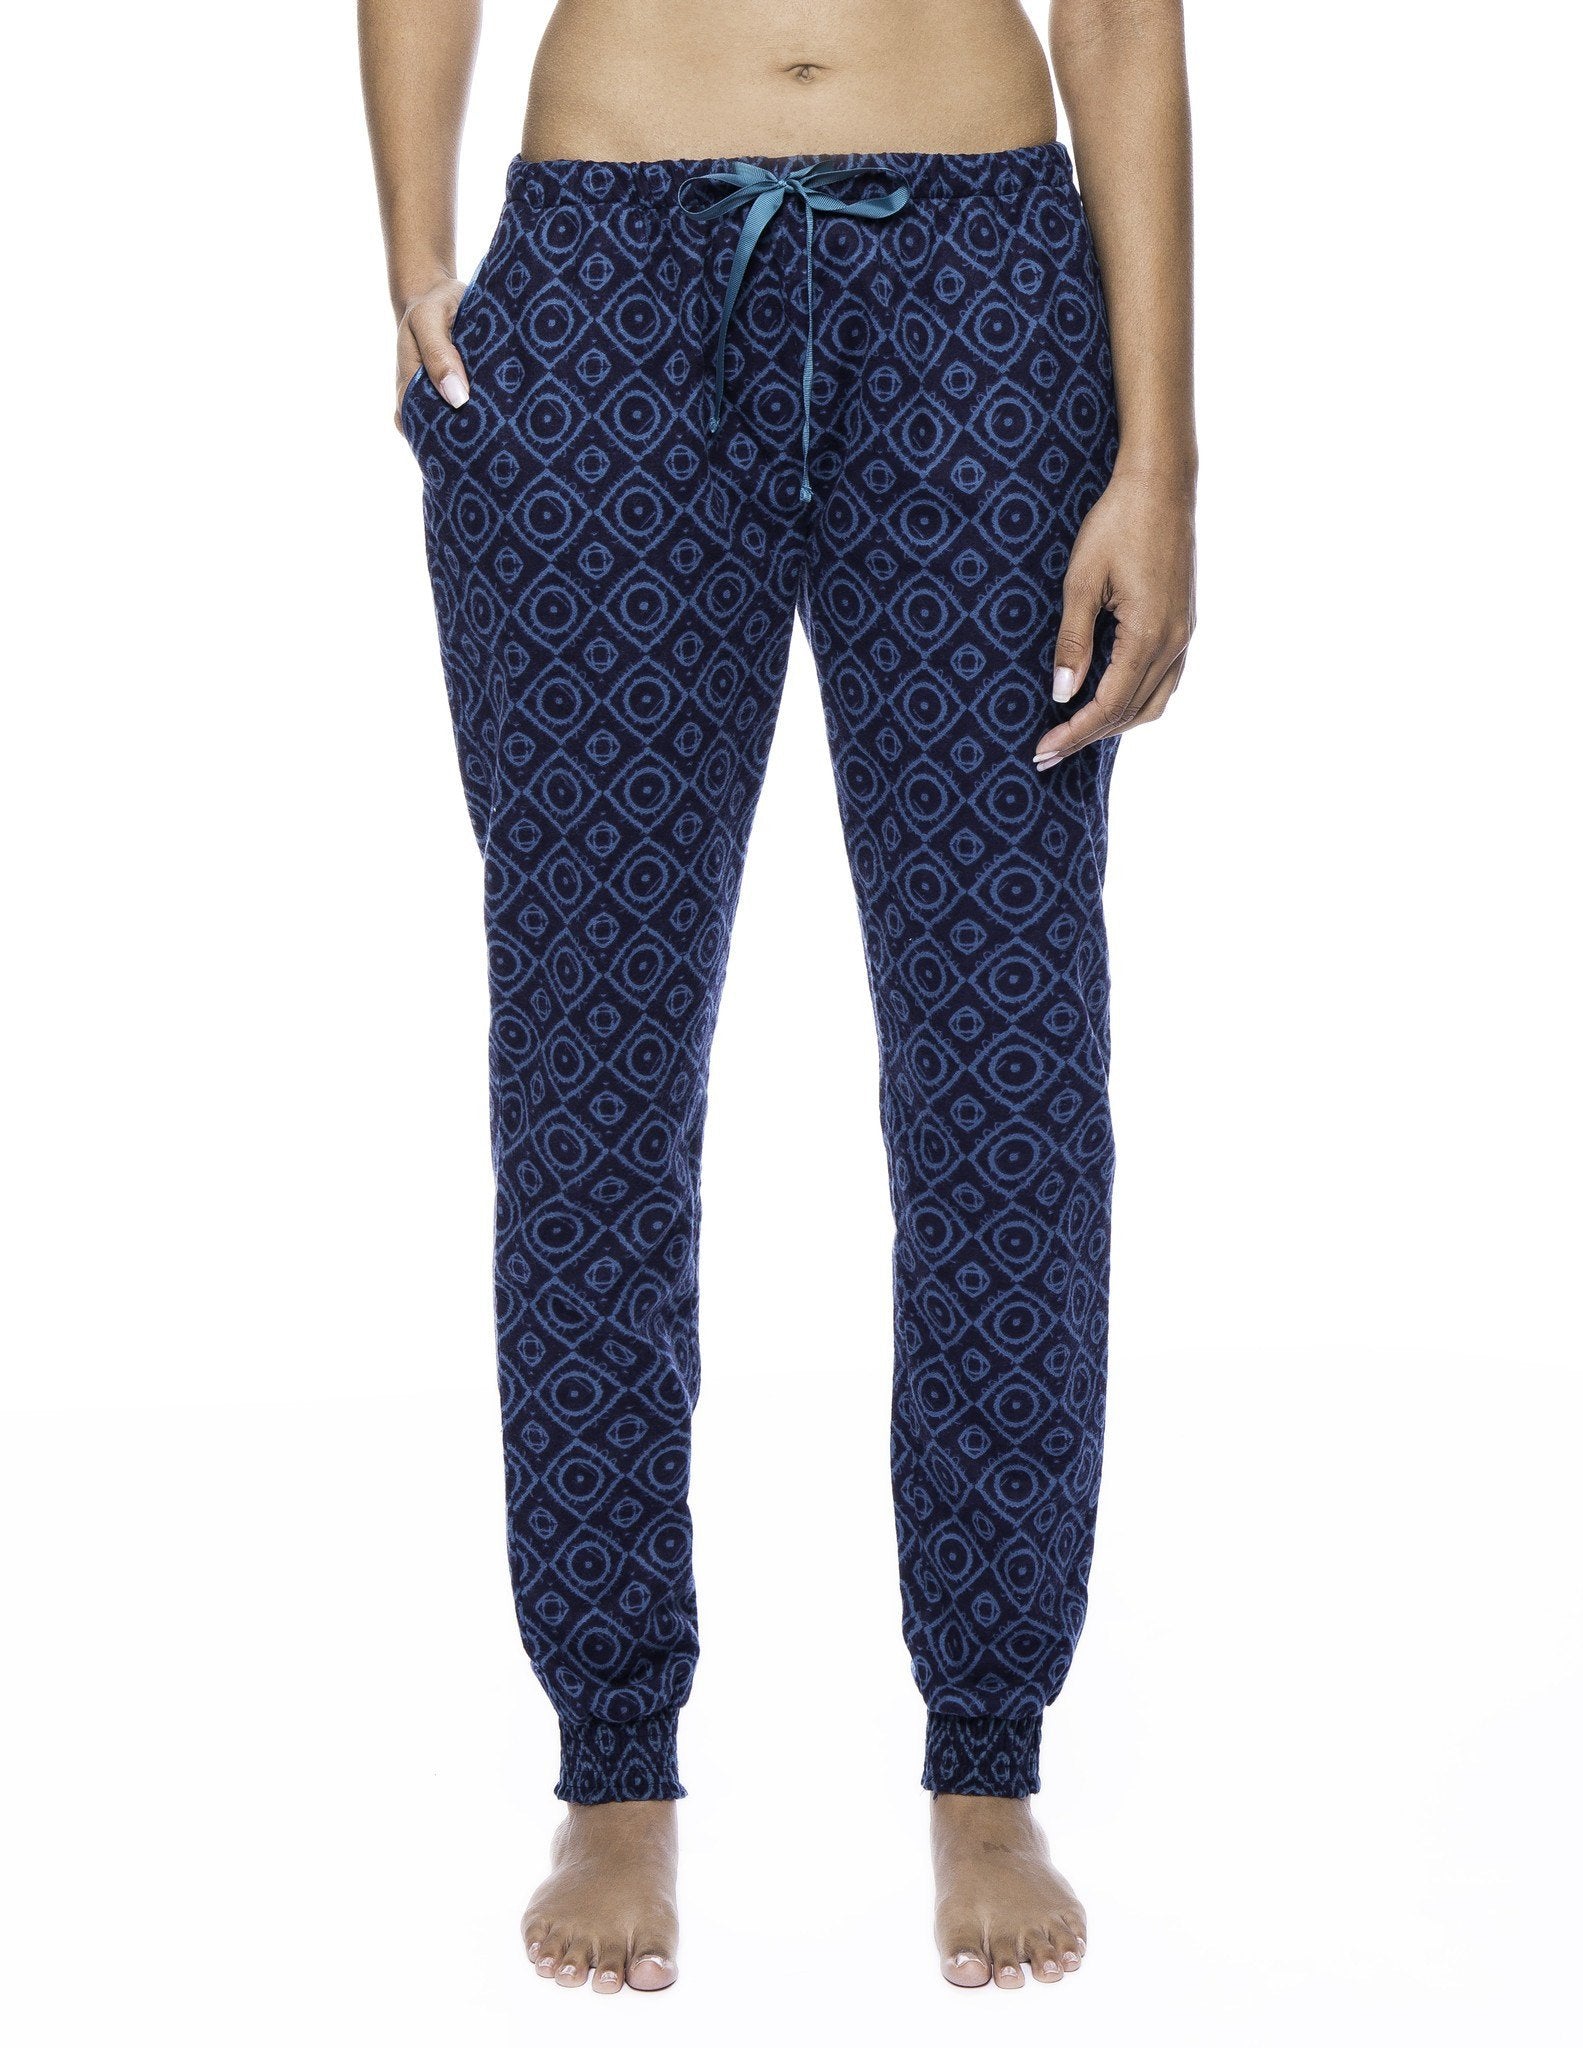 Women's Premium Flannel Jogger Lounge Pants - Moroccan Navy/Teal